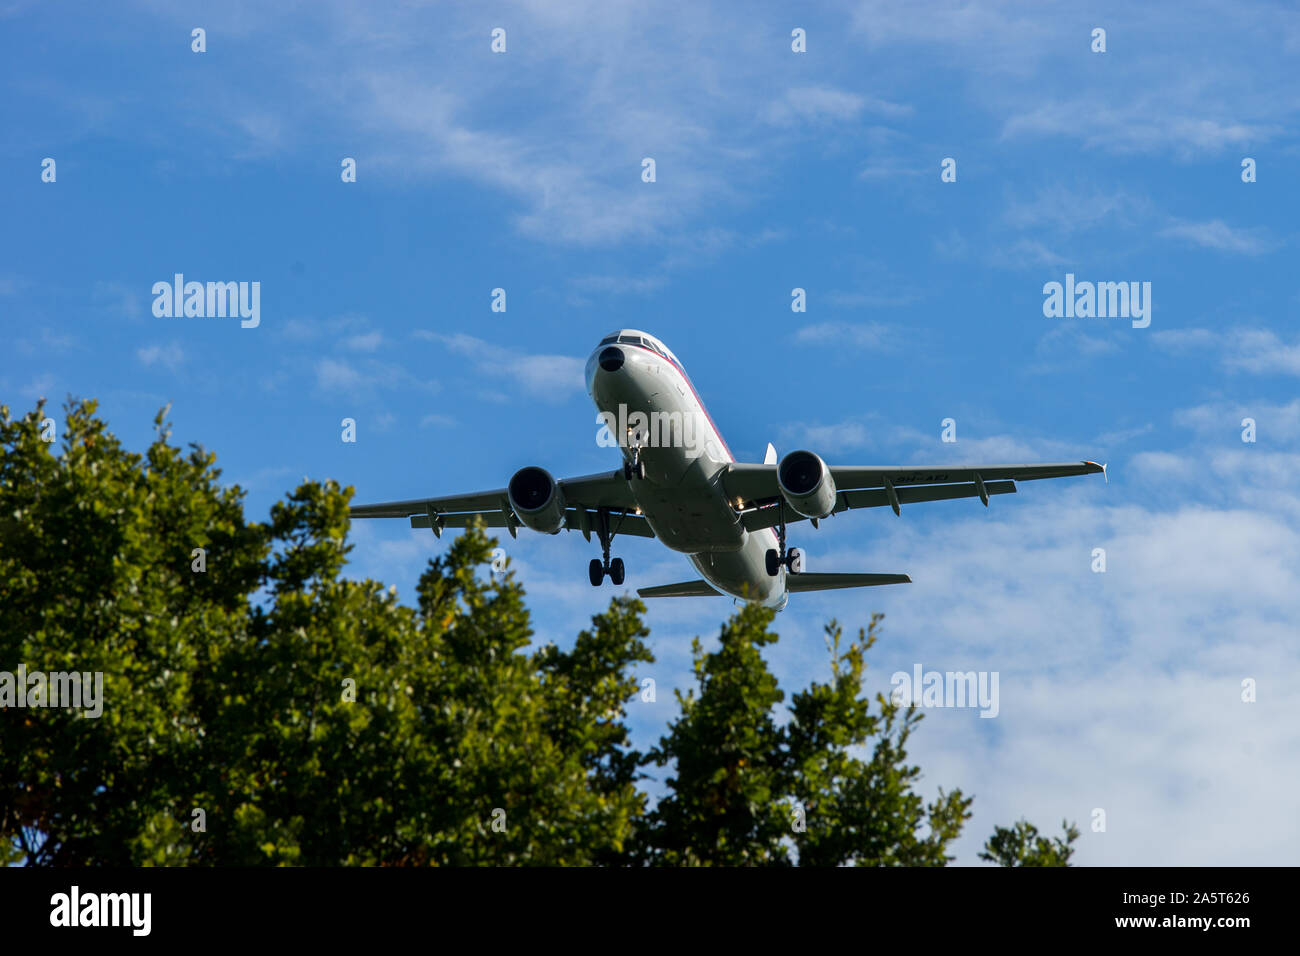 Landing A320 Stock Photo